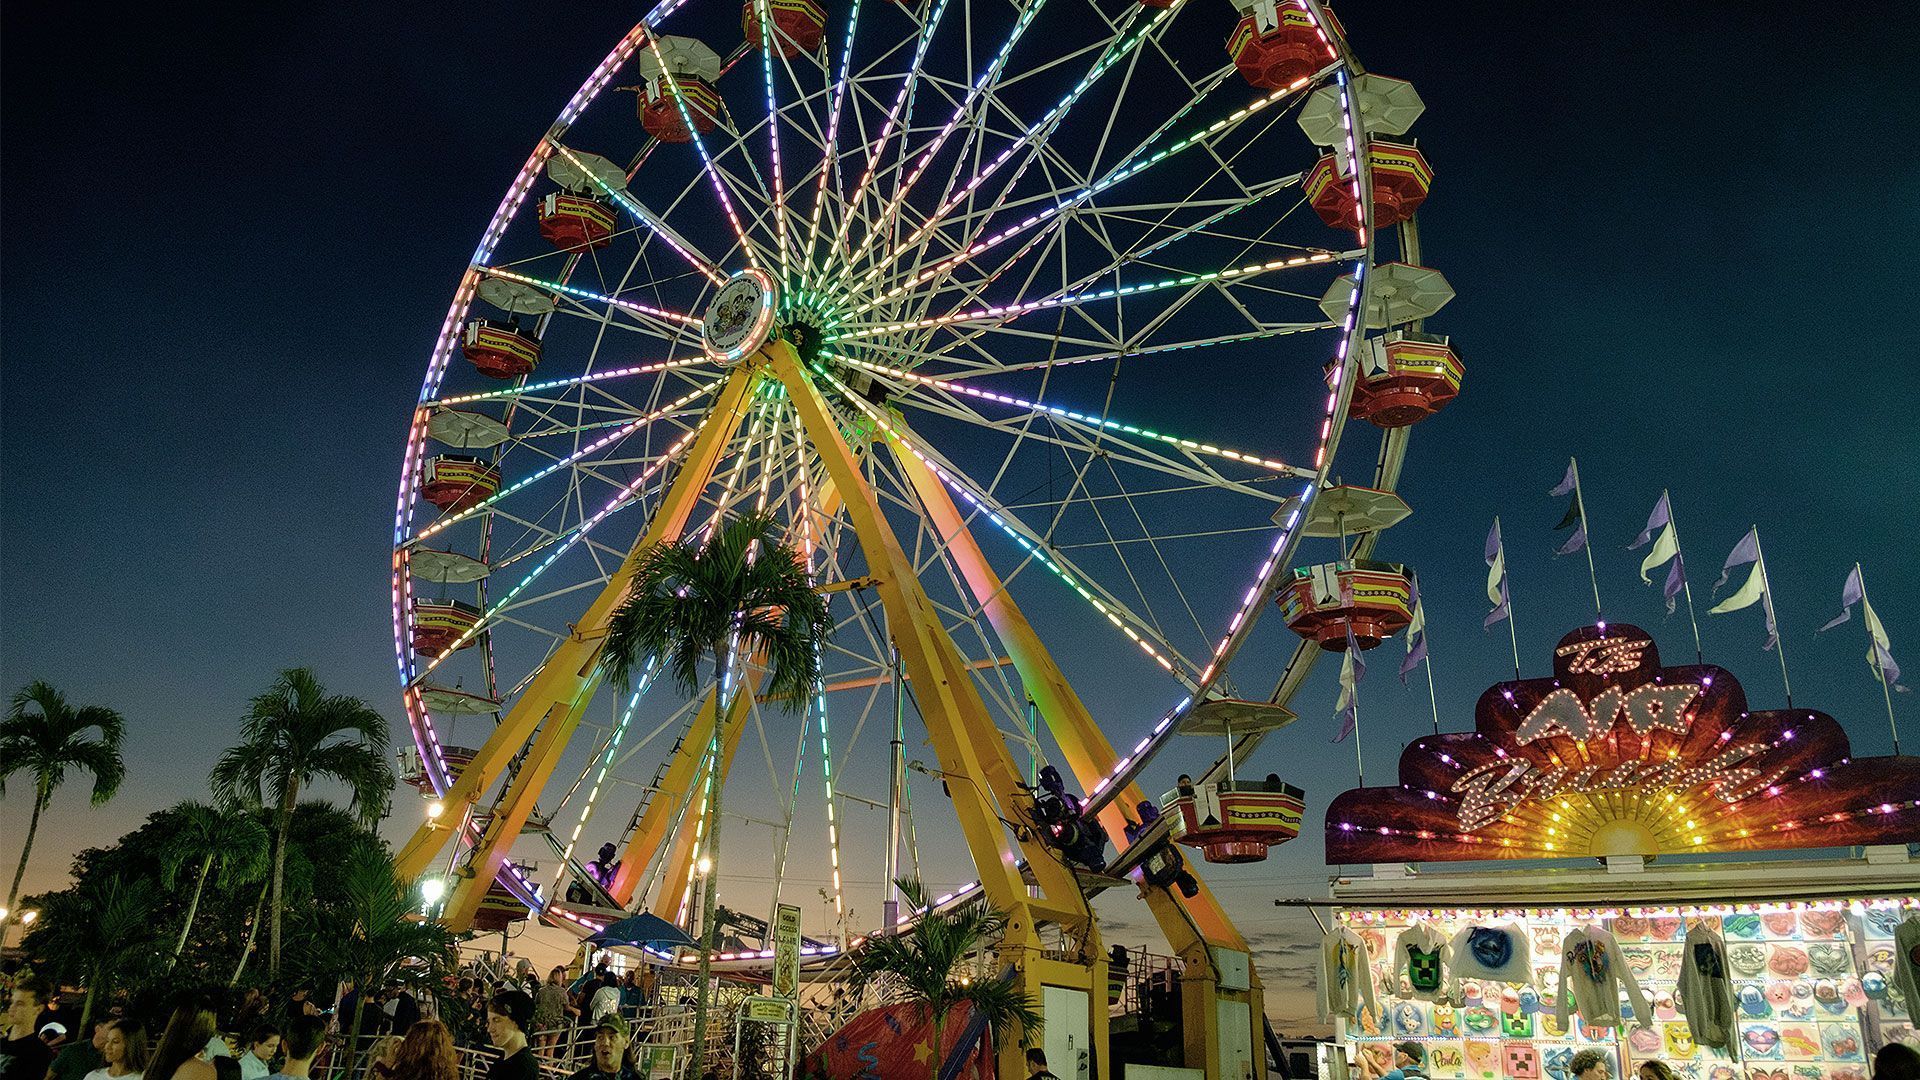 A ferris wheel at the Florida Strawberry Festival